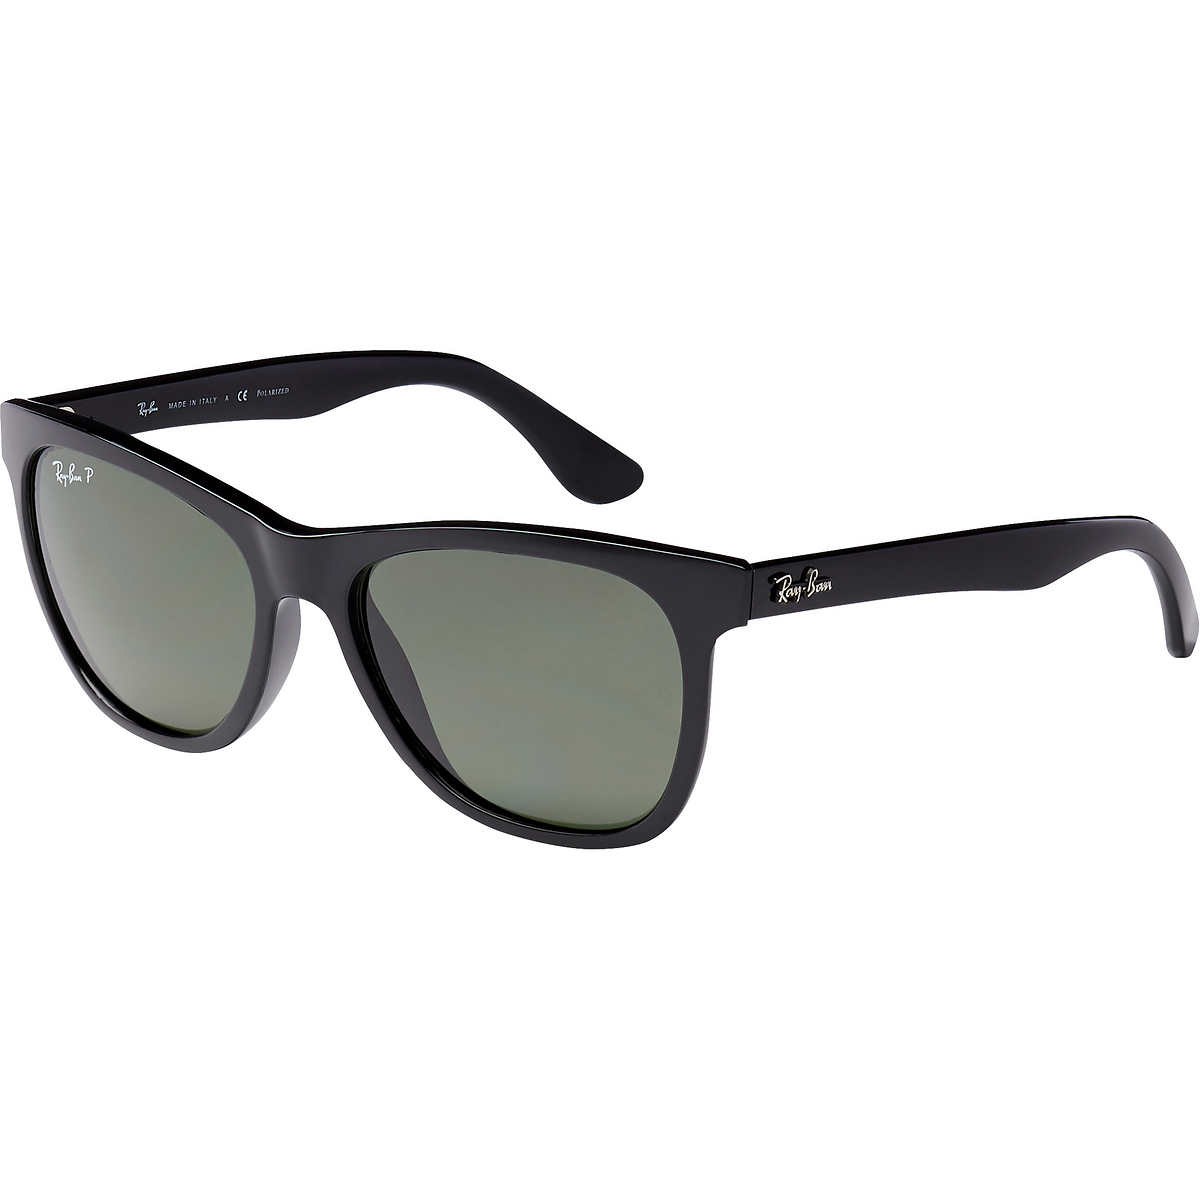 Ray Ban Rb4184 Black Polarized Sunglasses